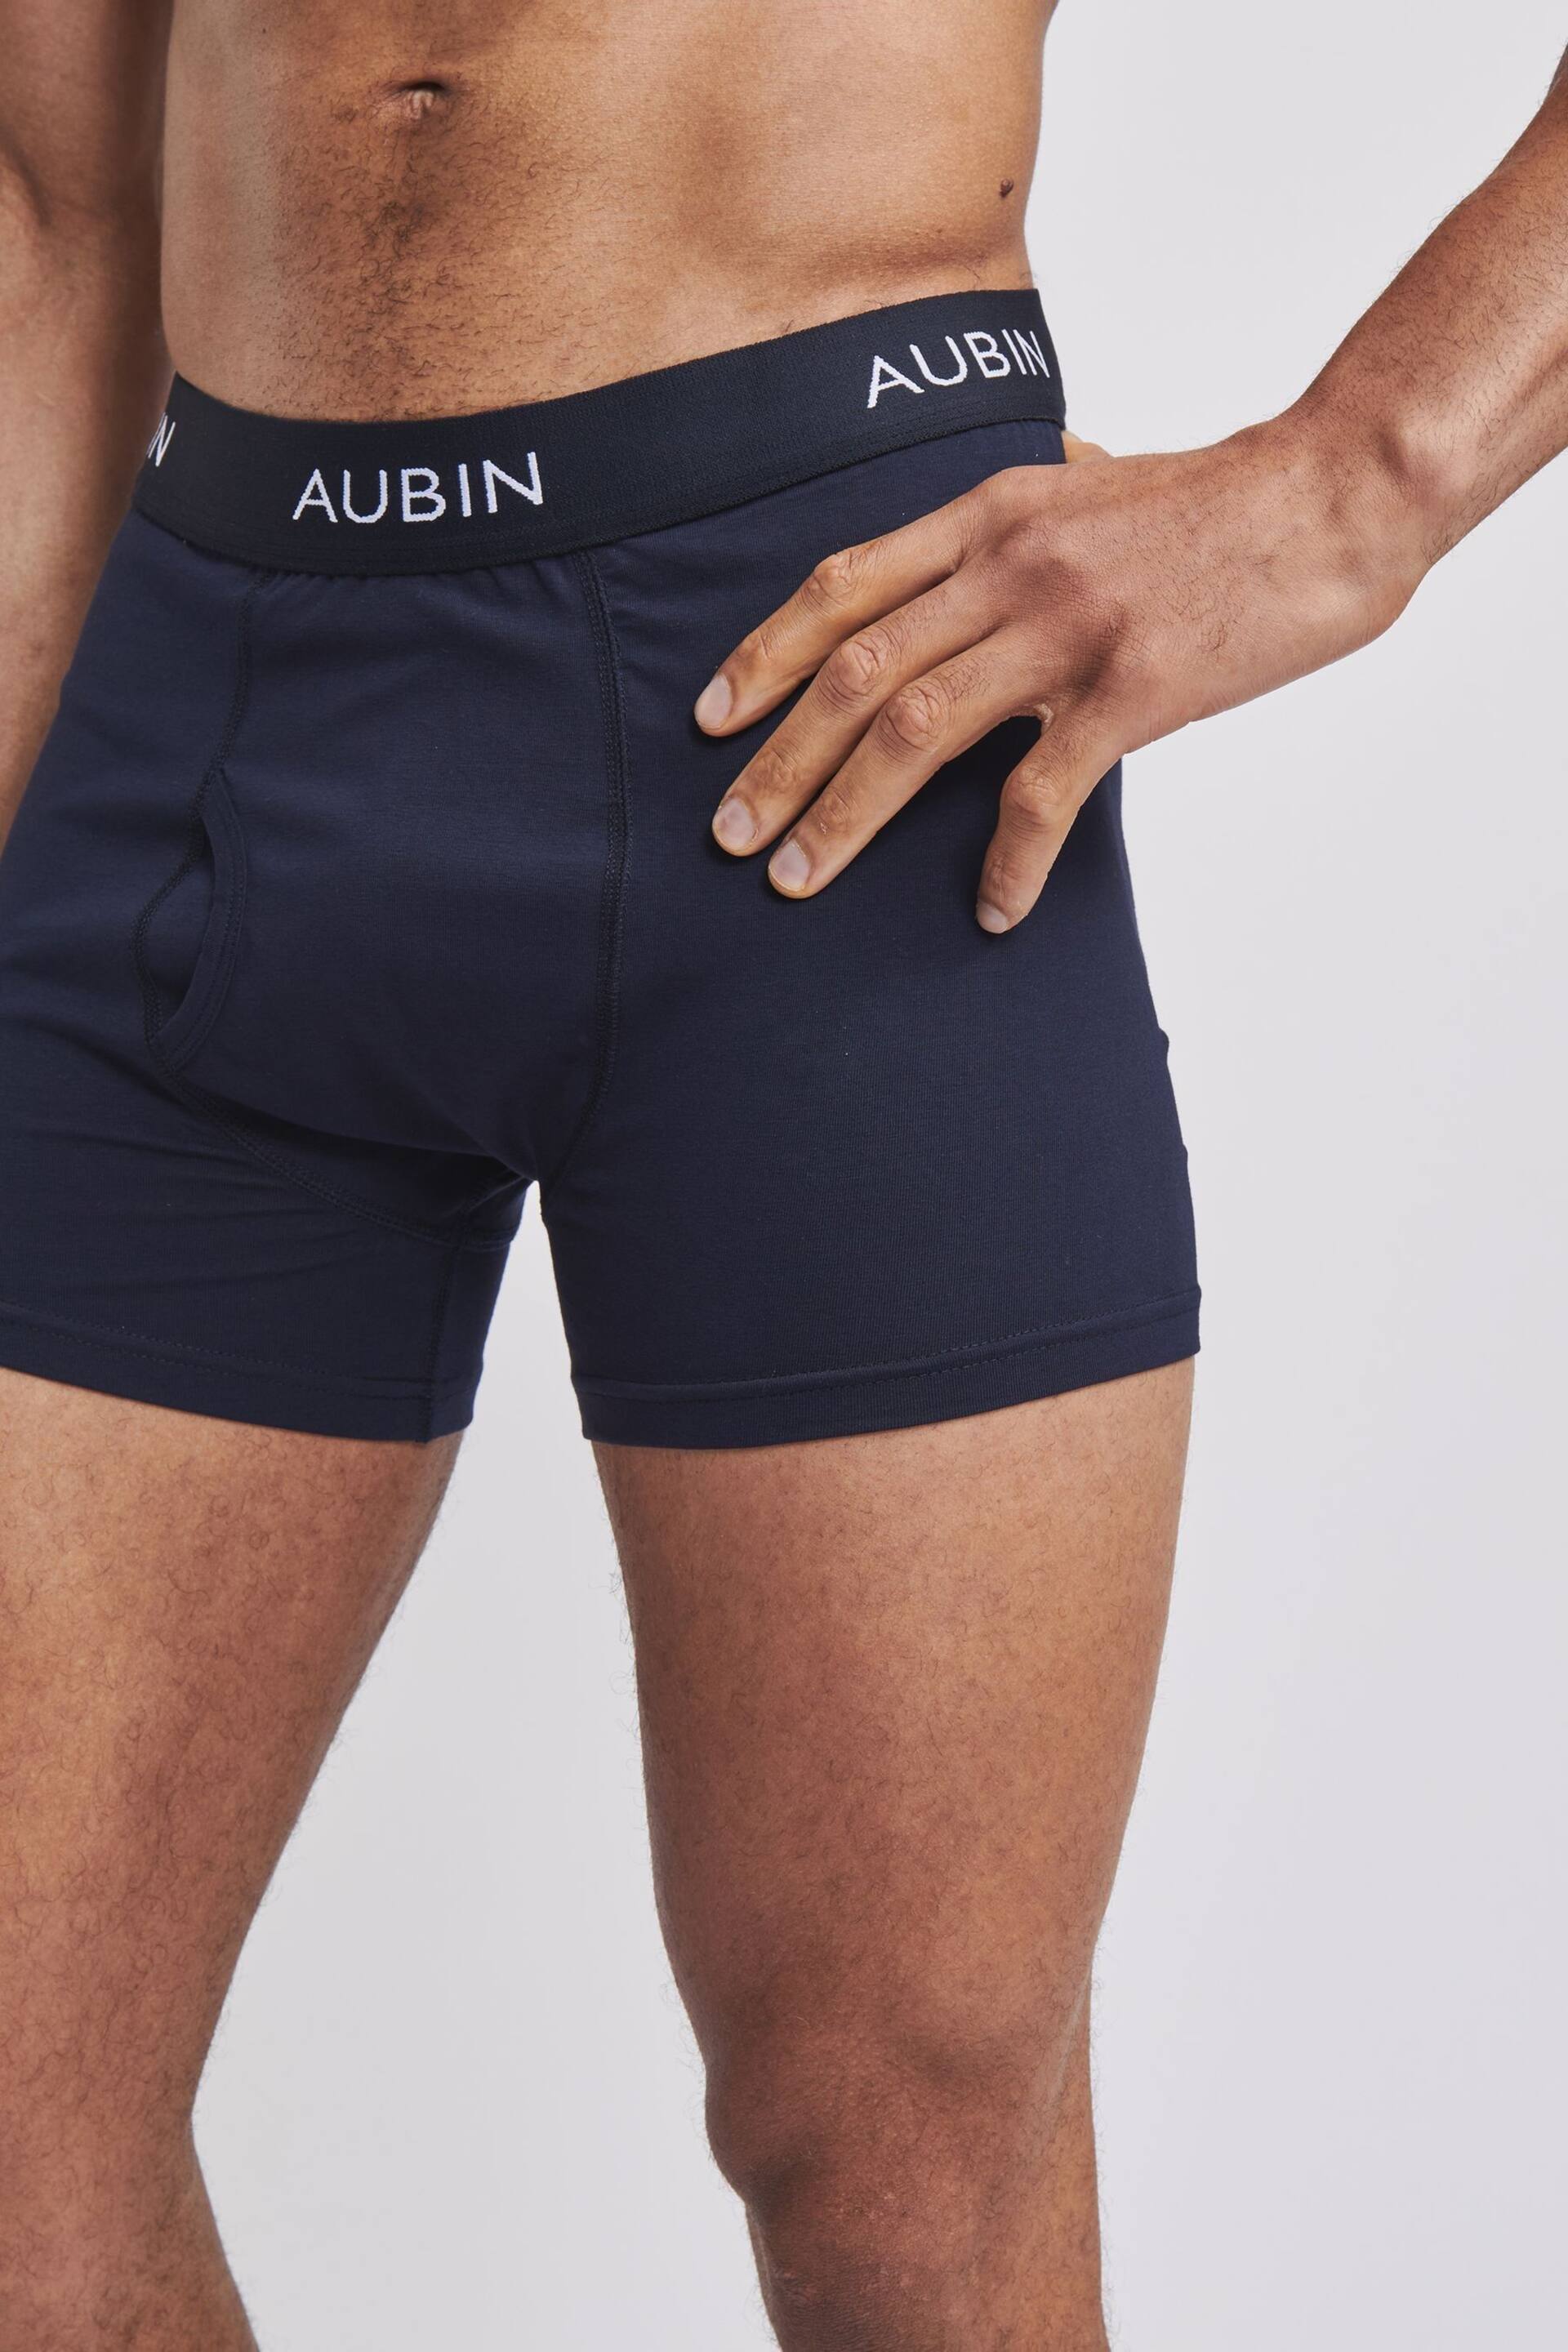 Aubin Hellston Boxer Shorts 3 Pack - Image 6 of 6